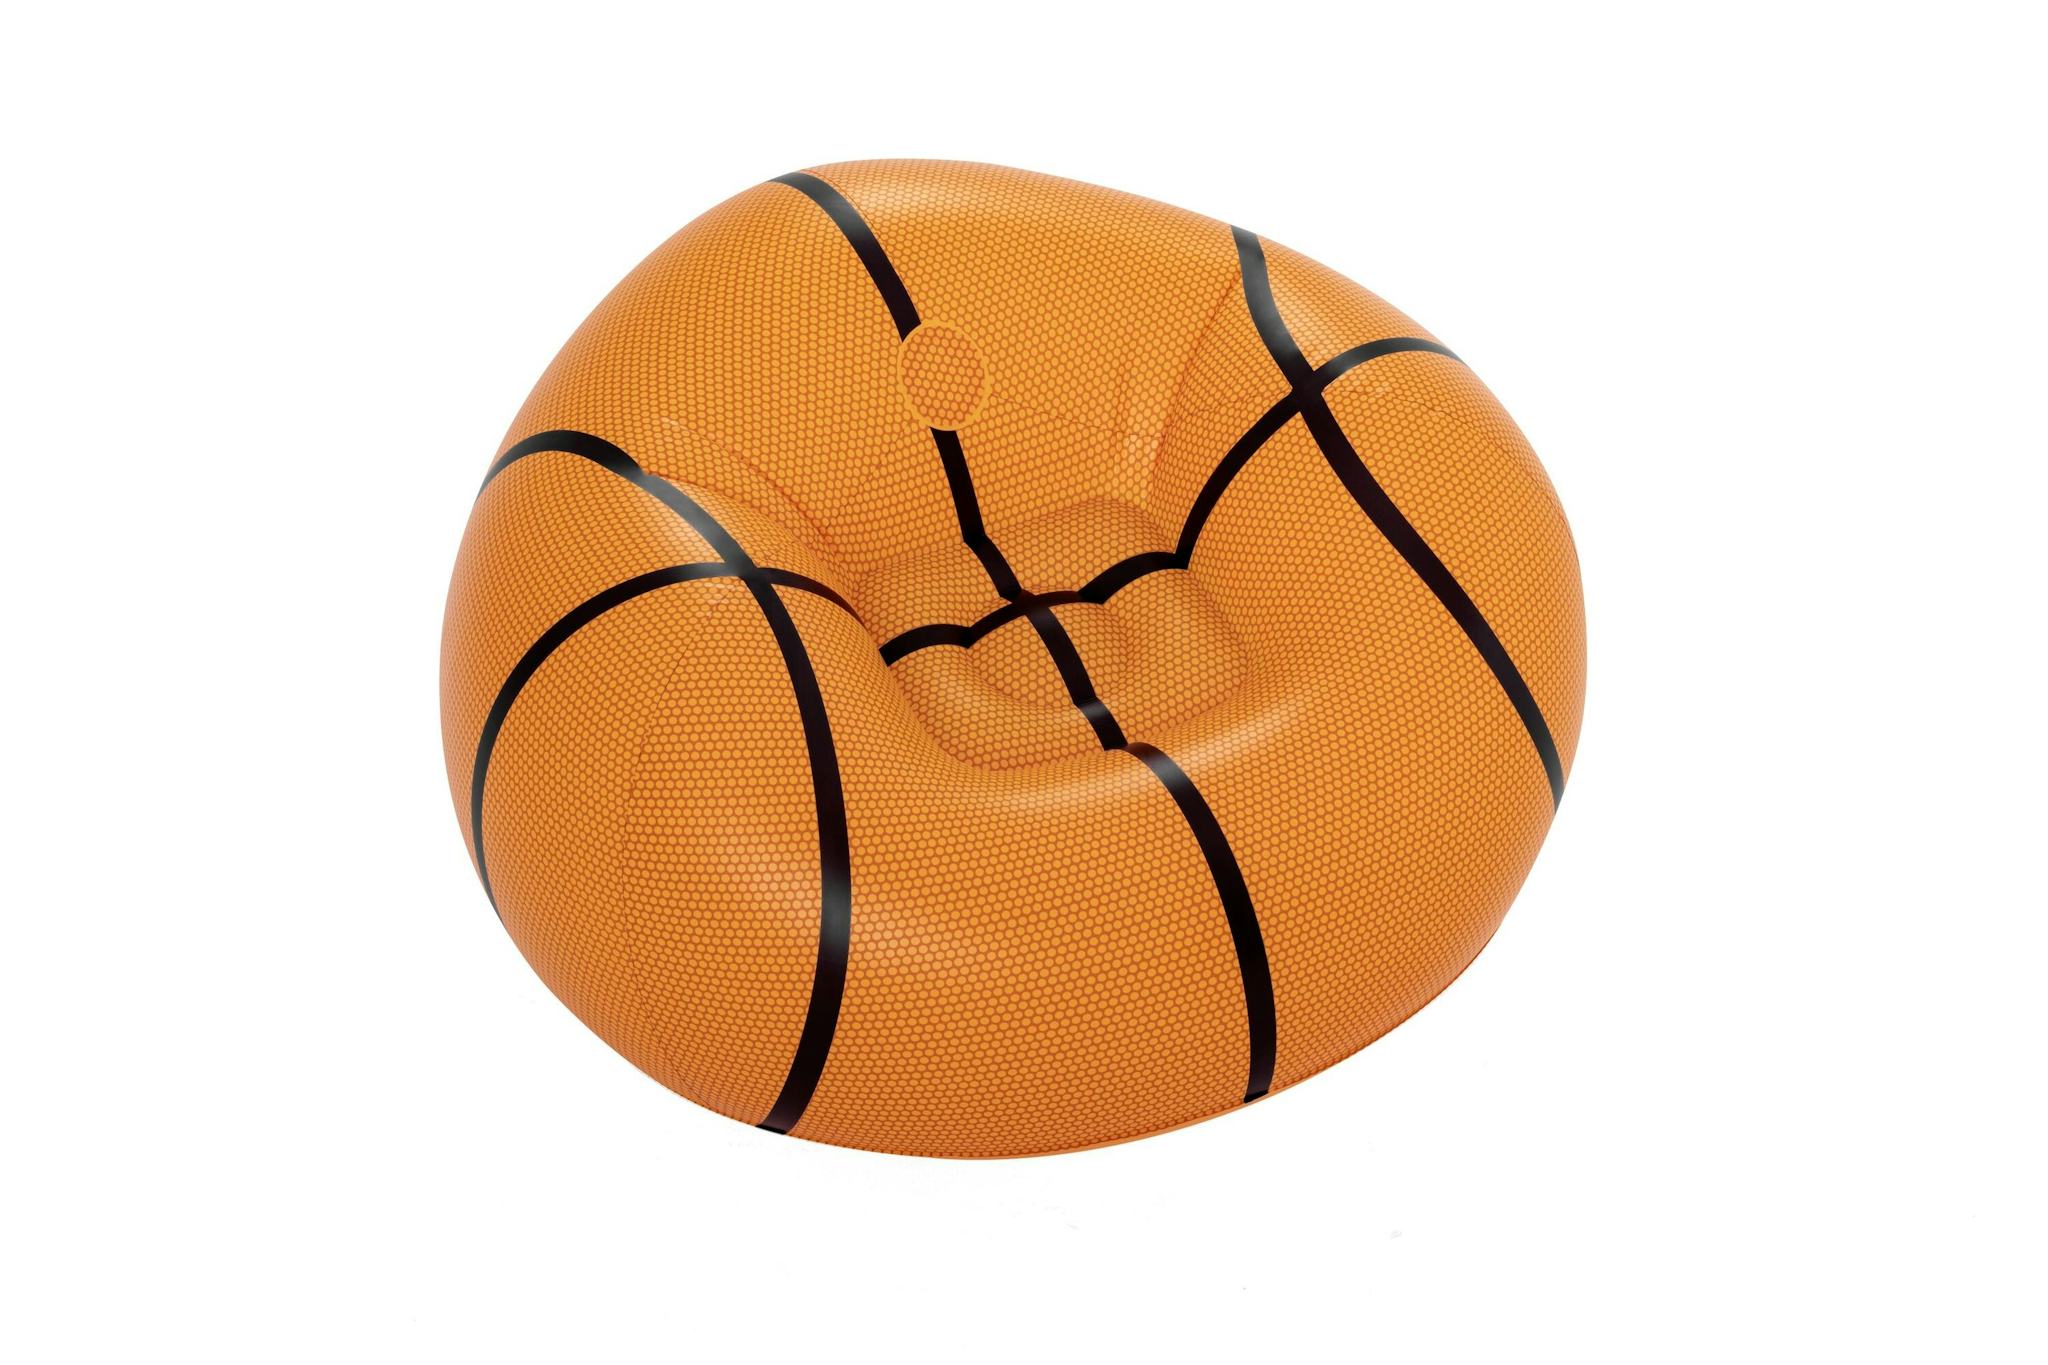 Giochi gonfiabili per bambini Poltrona pouf gonfiabile Basketball Bestway 4